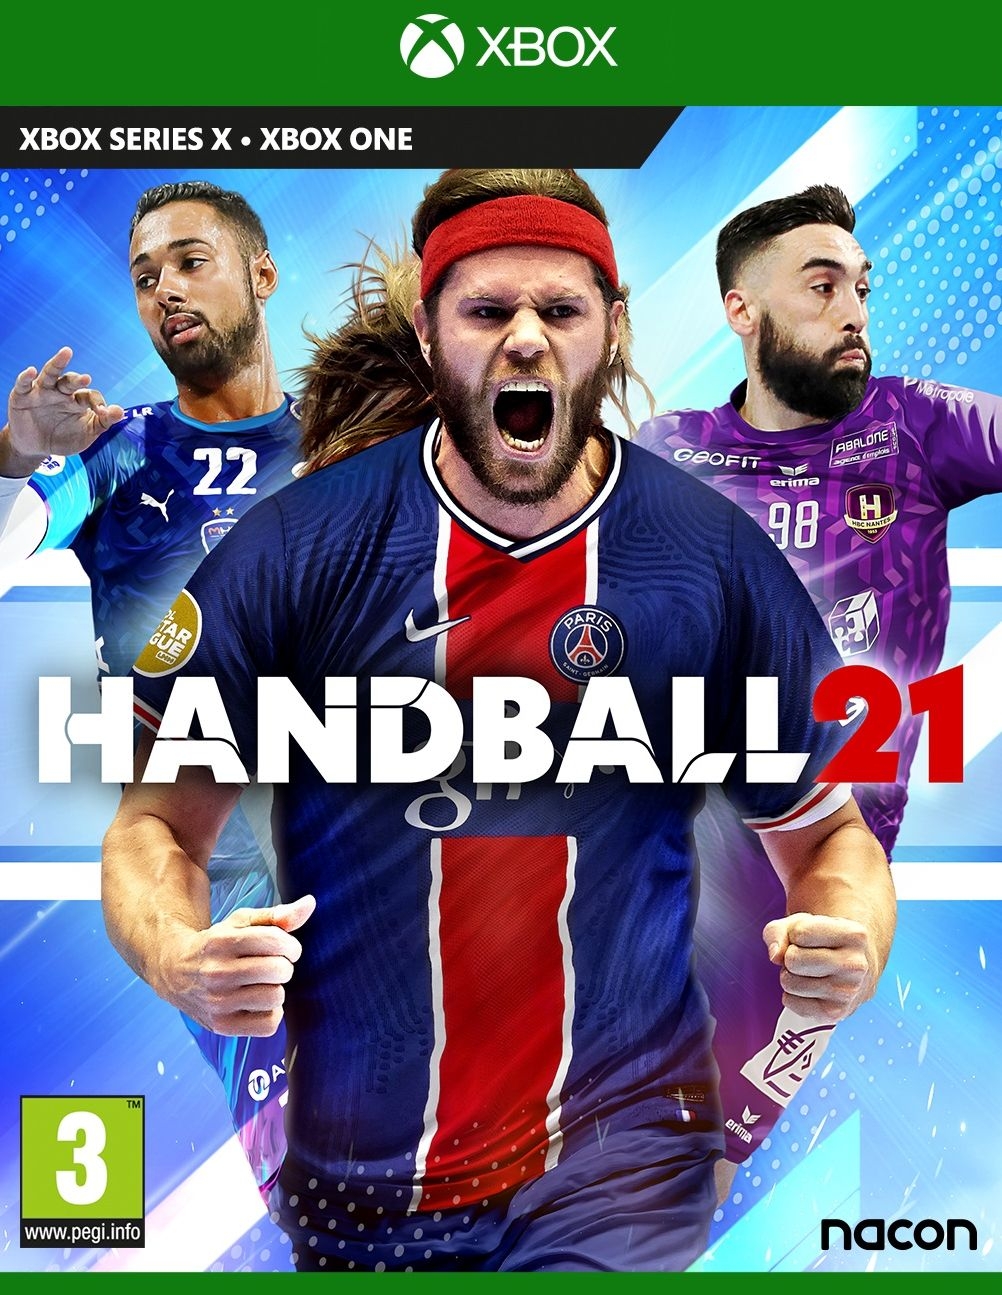 XBOXOne/SeriesX Handball 21